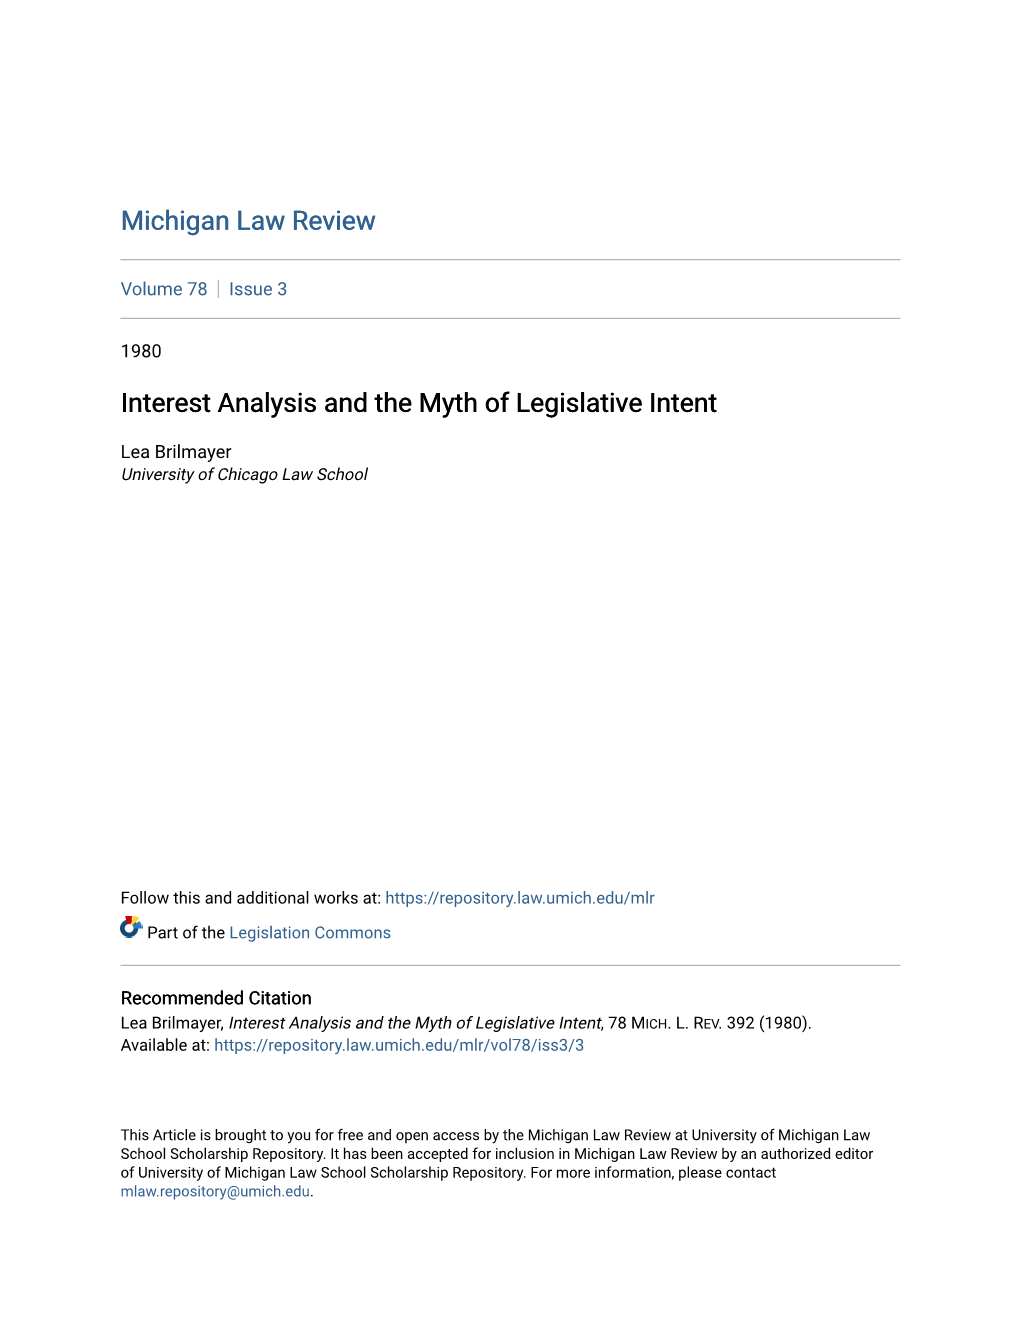 Interest Analysis and the Myth of Legislative Intent